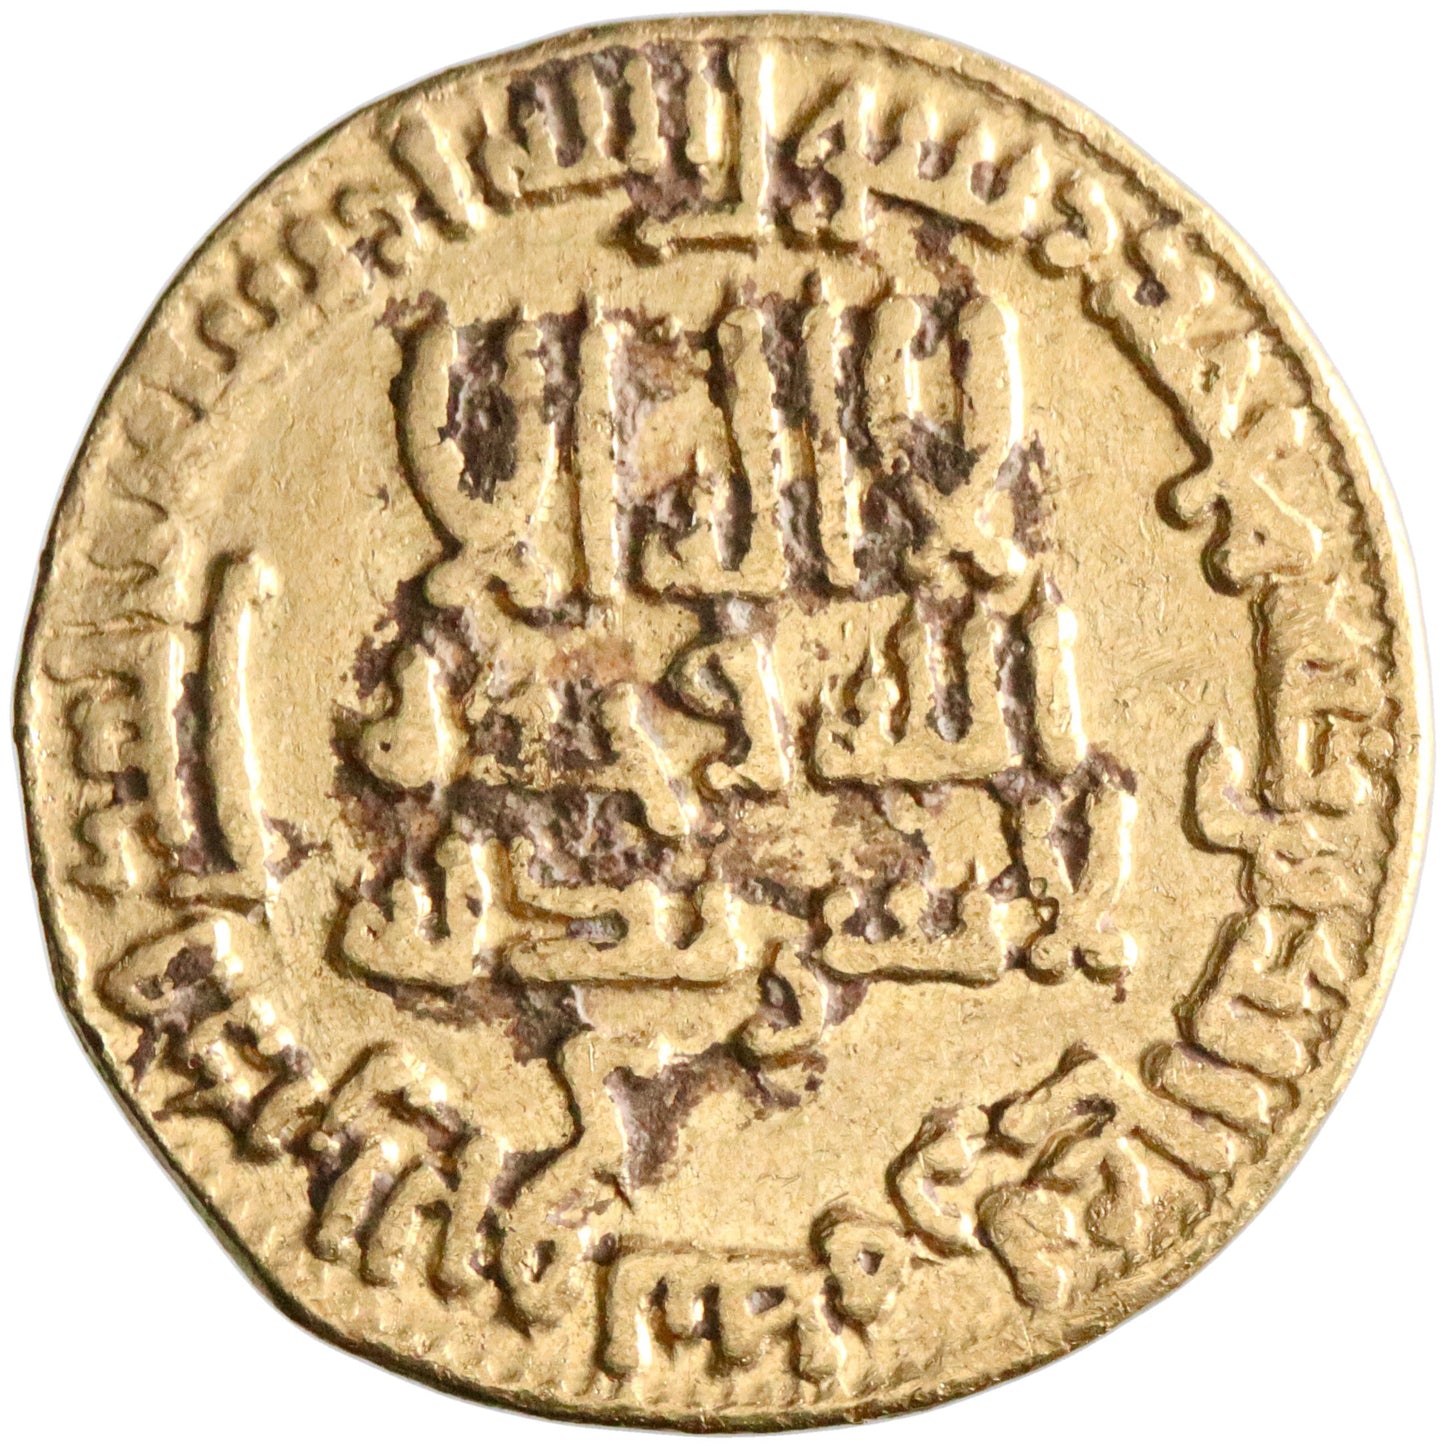 Abbasid, Harun al-Rashid, gold dinar, AH 171, citing Musa [ibn 'Isa]